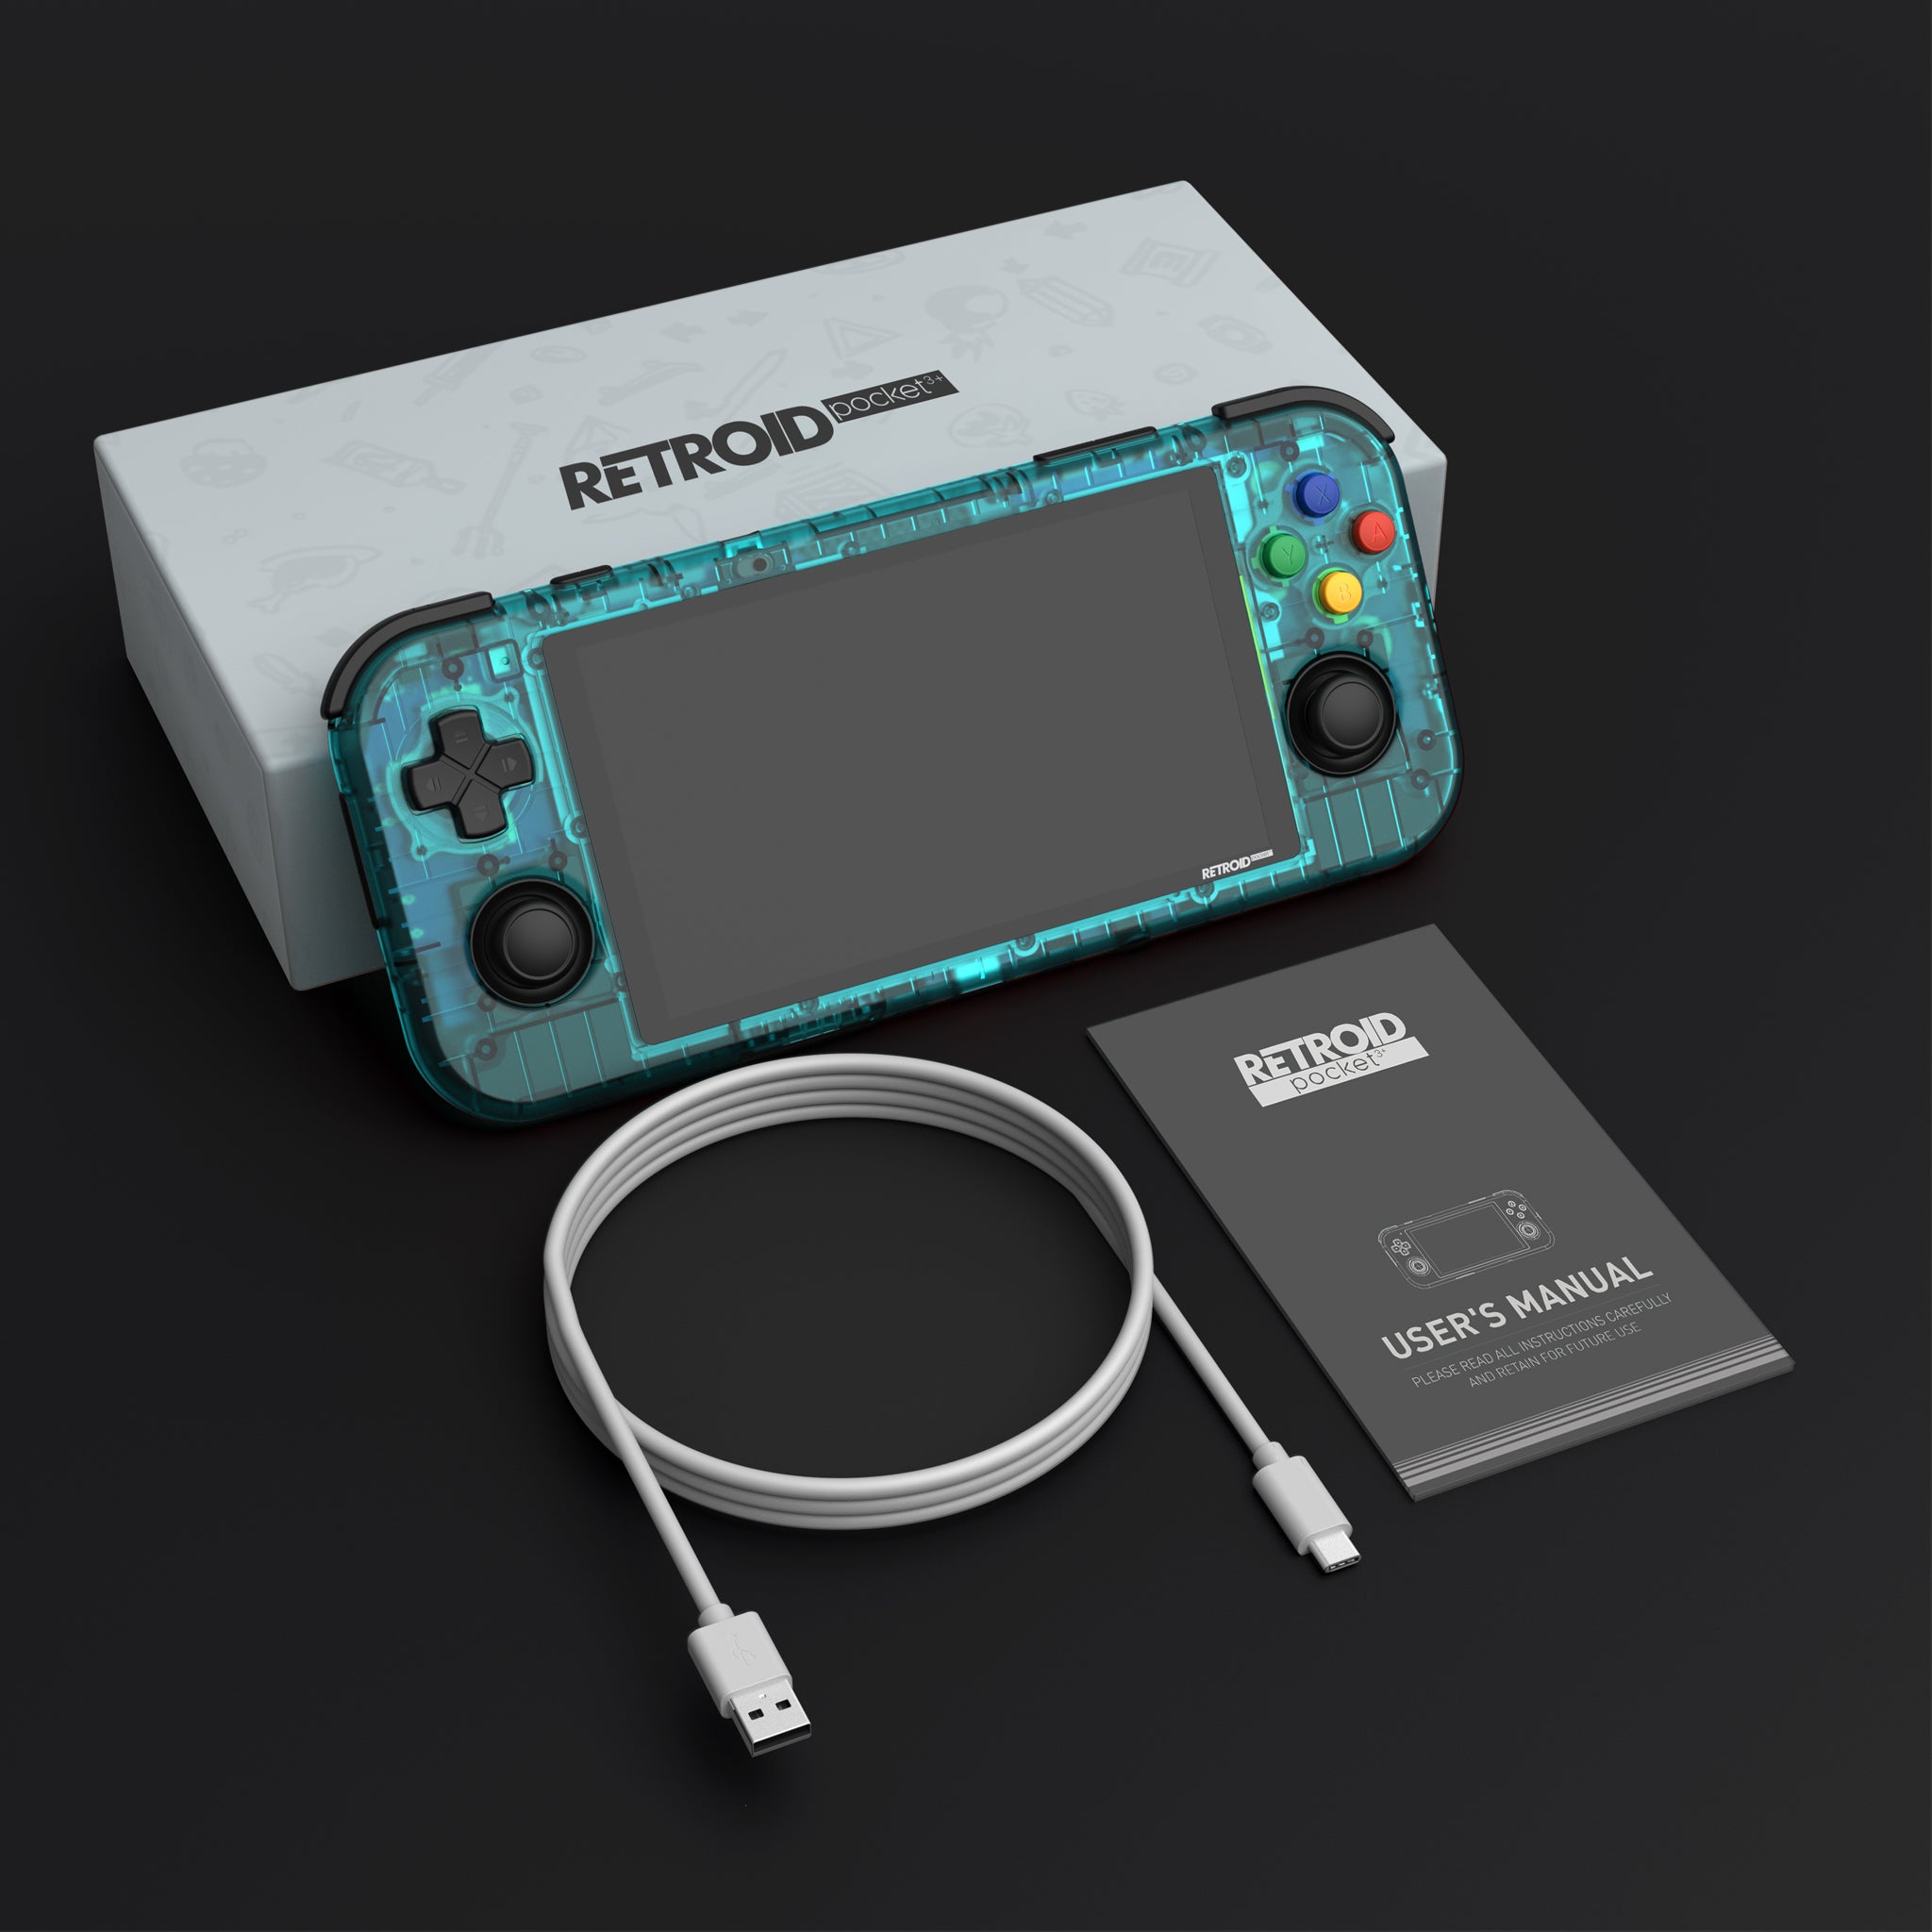 Retroid Pocket 3+ Handheld Retro Gaming System